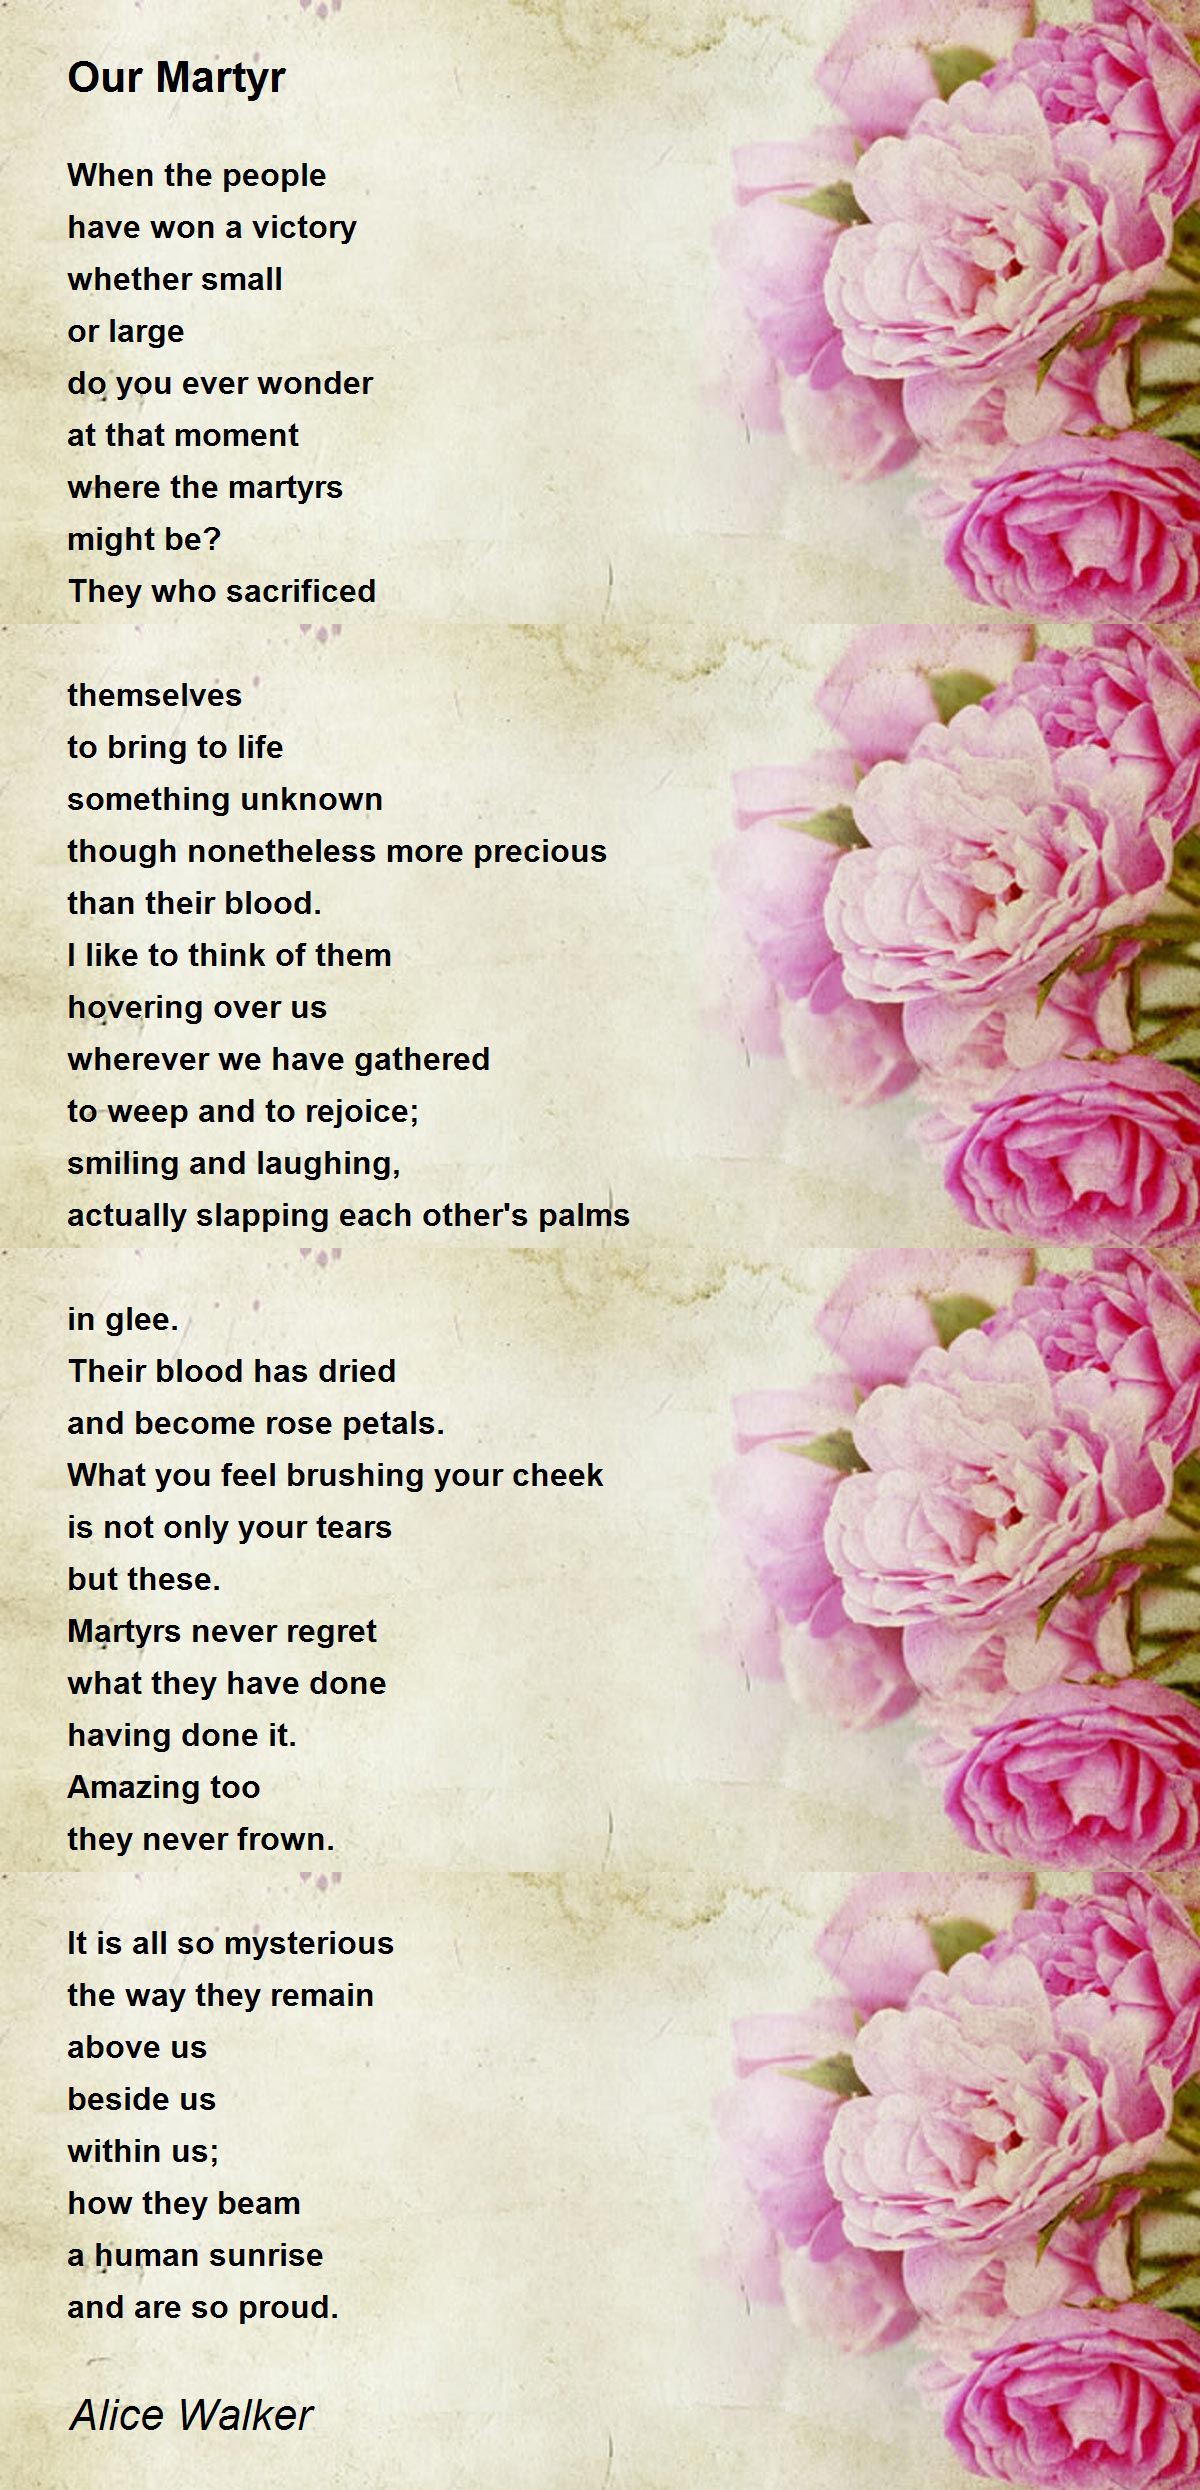 Our Martyr Poem by Alice Walker - Poem Hunter Comments